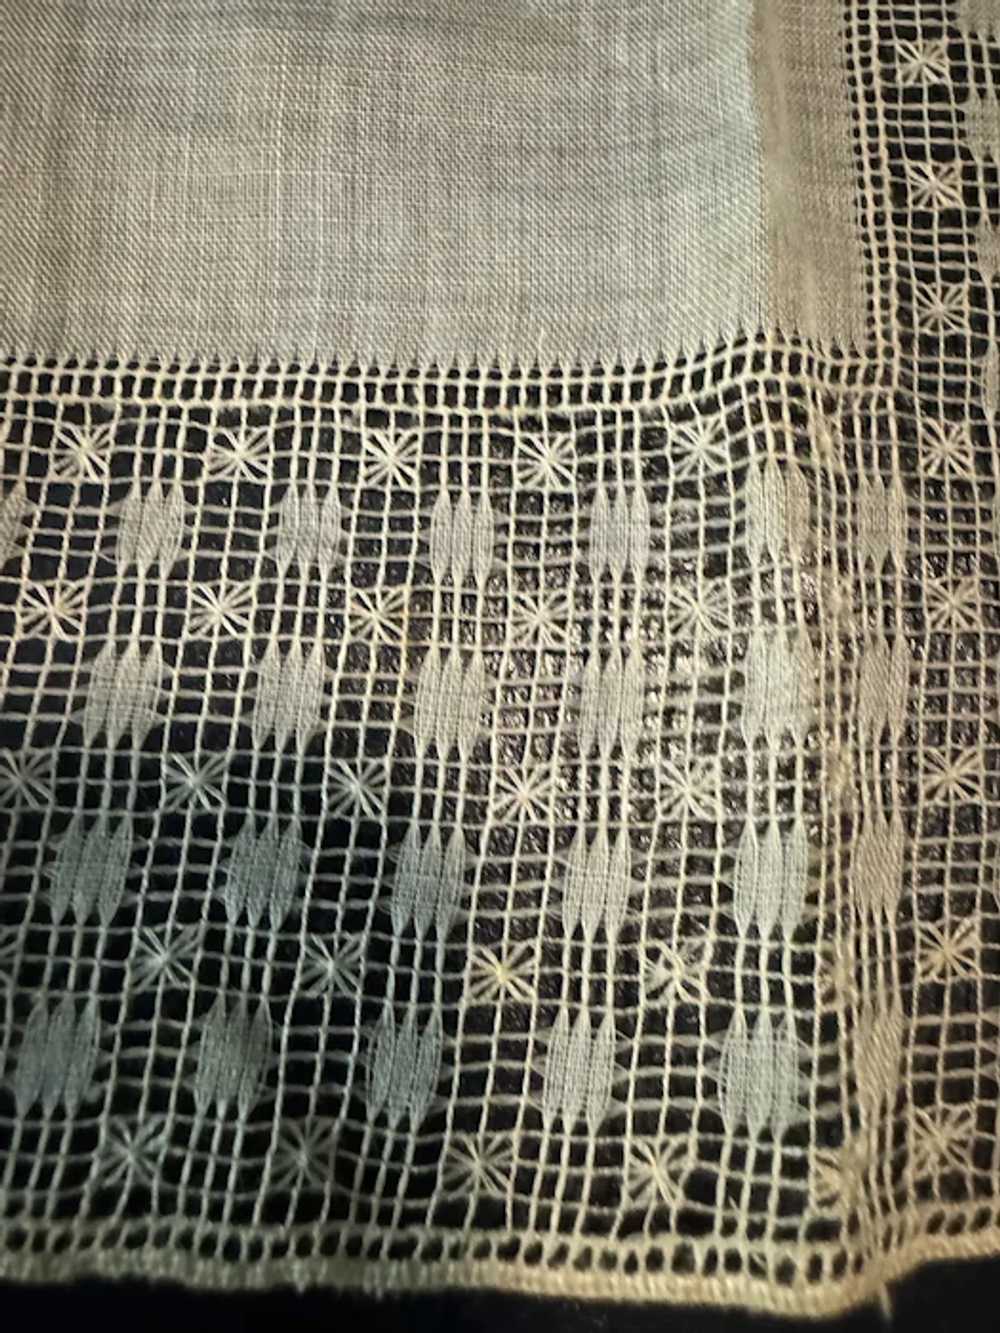 vintage  lace Hankie  detail - image 3